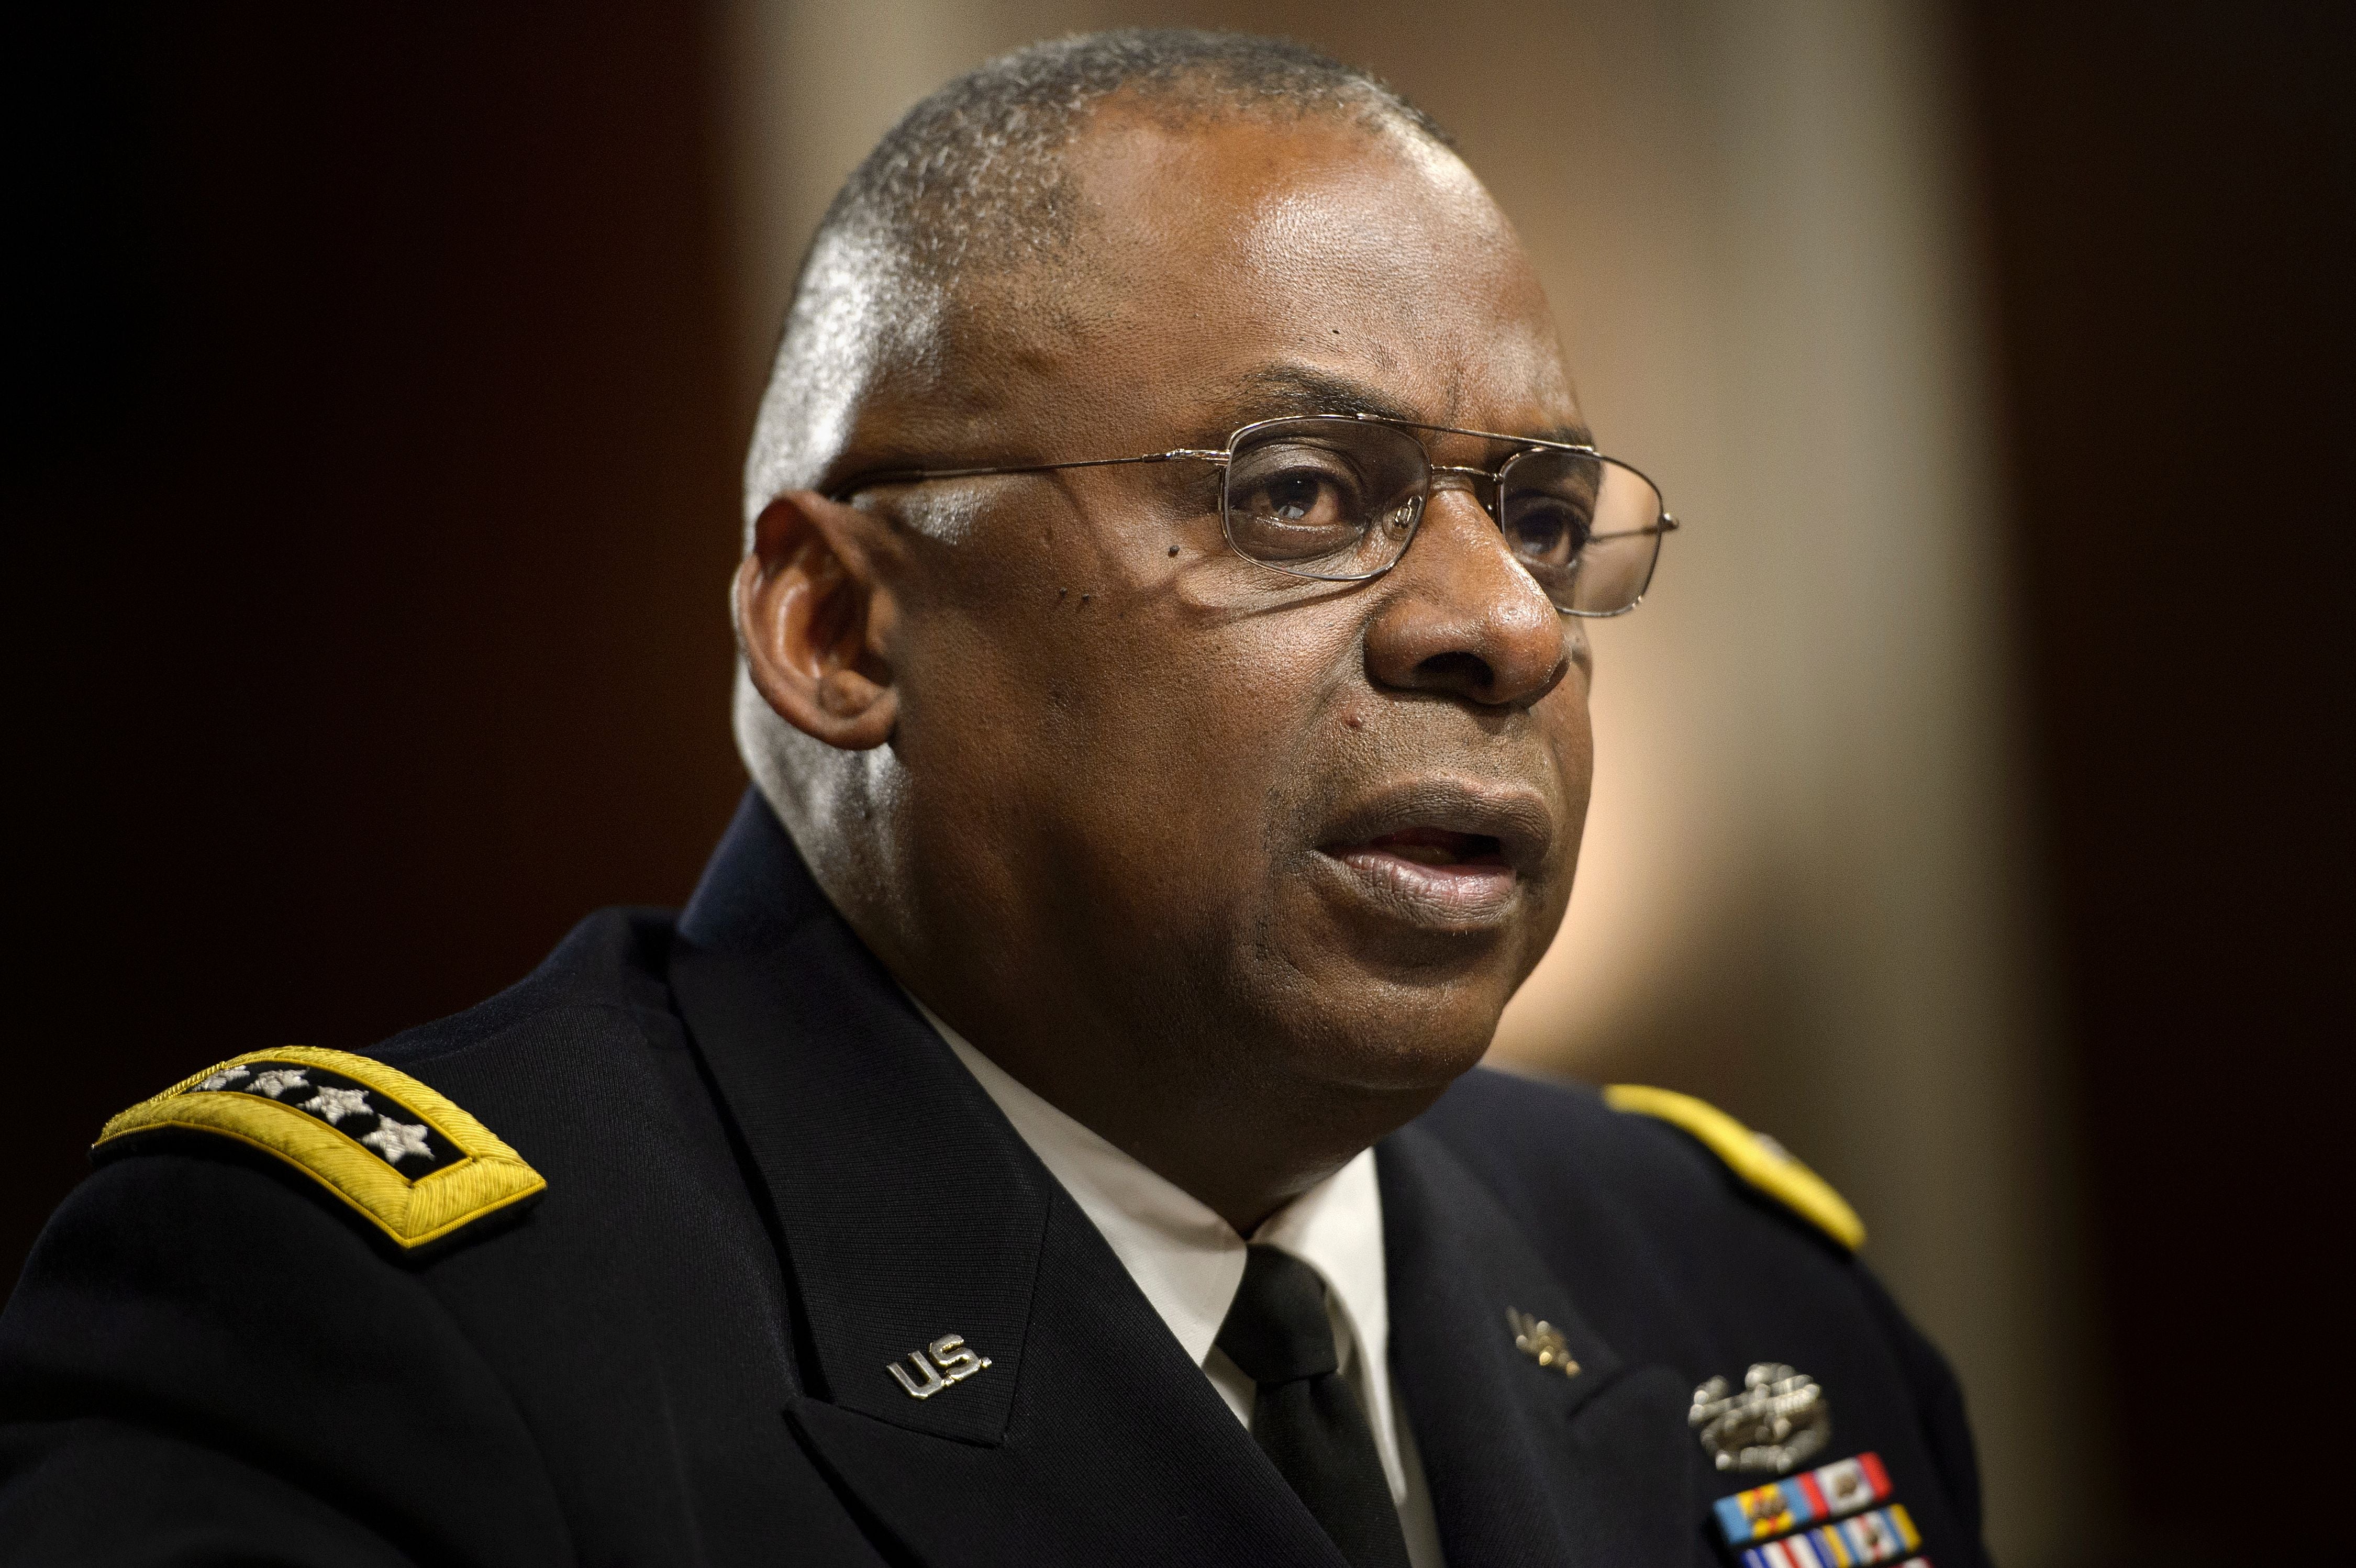 Biden considers retired four-star General Lloyd Austin to head U.S. military as Pentagon chief